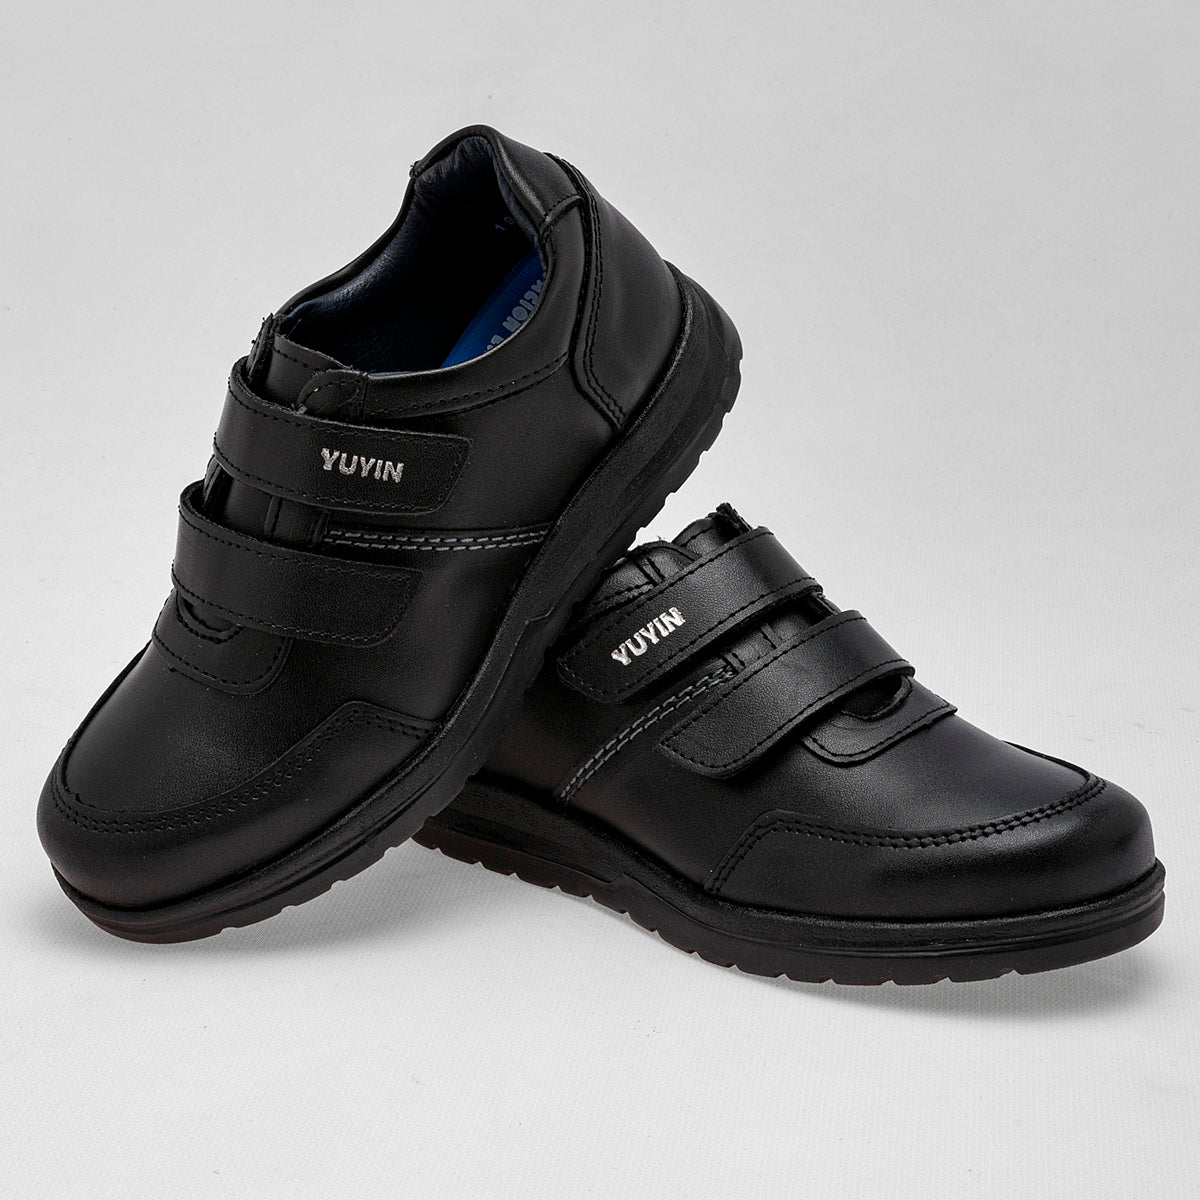 Pakar.com - Mayo: Regalos para mamá | Zapato casual para niño cod-111345